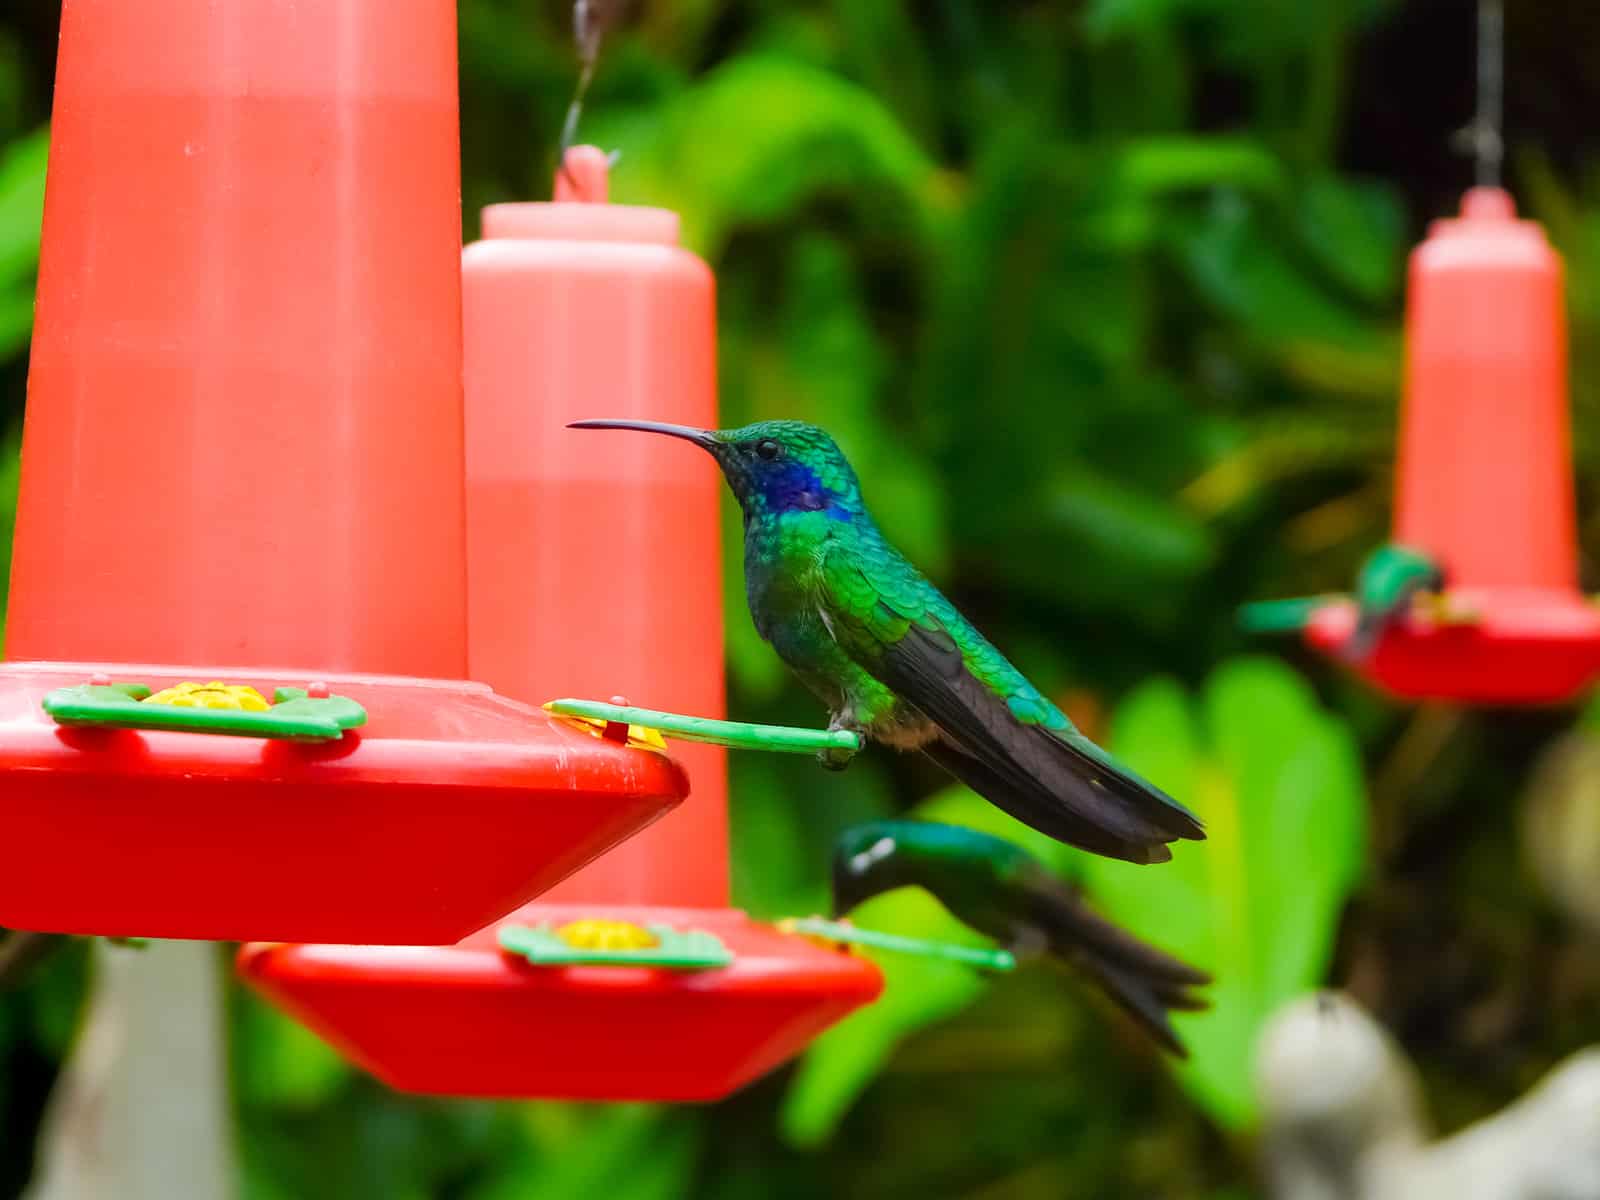 a hummingbird on a red feeder in a garden scene.